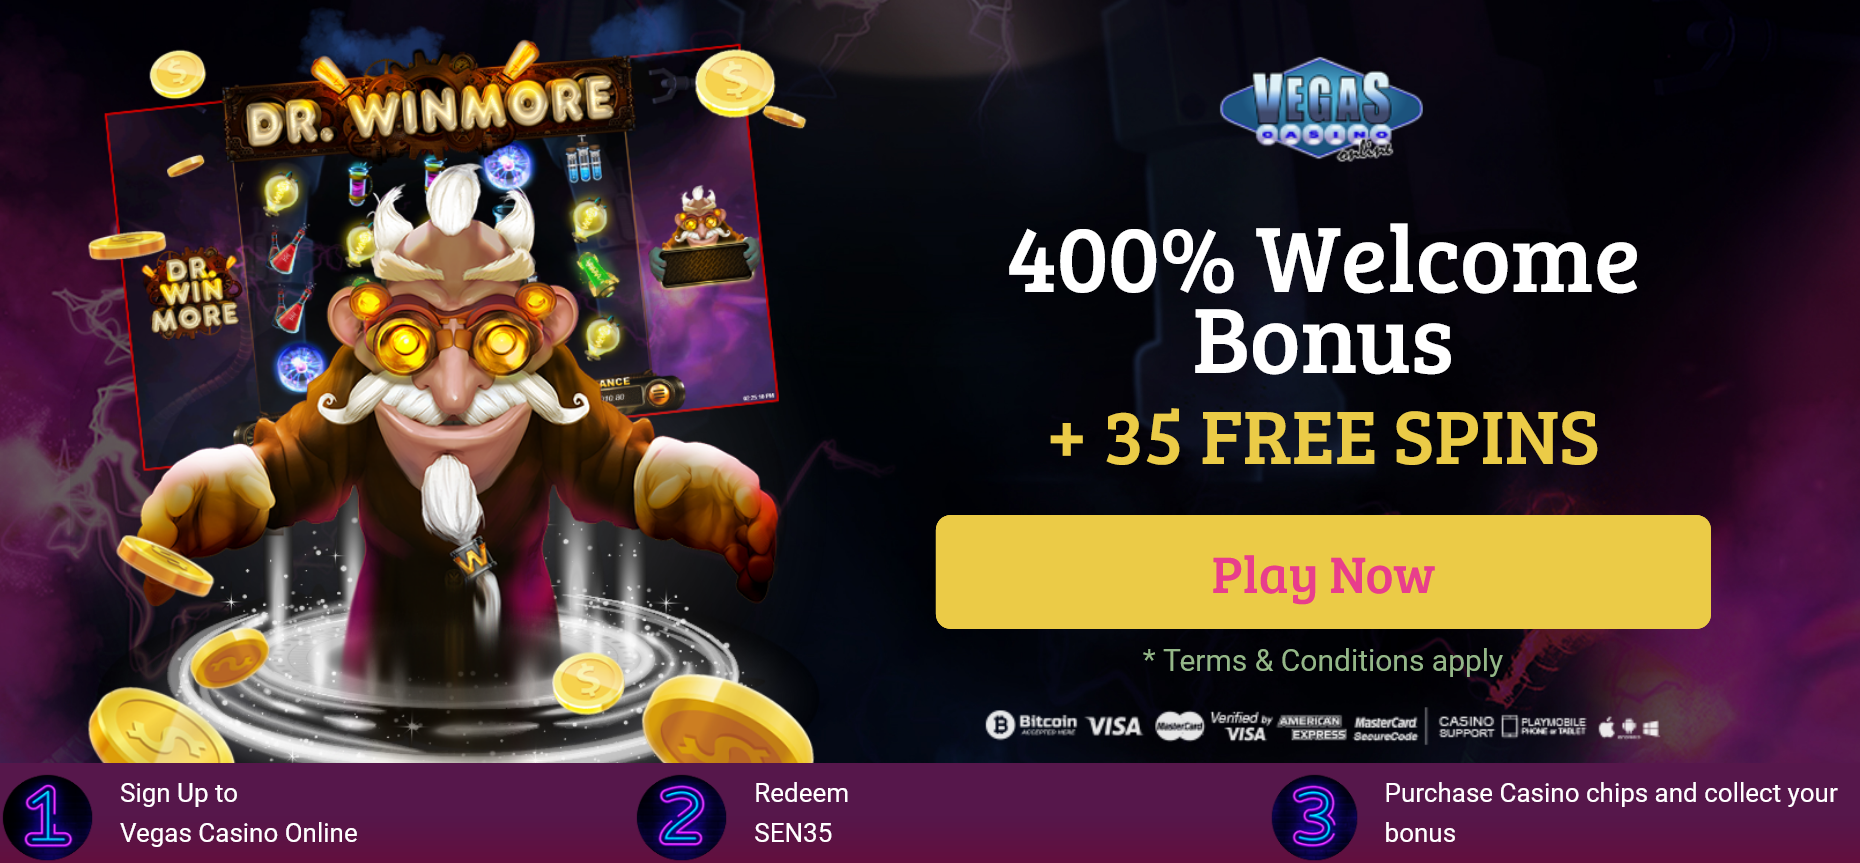 400% Welcome Bonus + 35 FREE SPINS